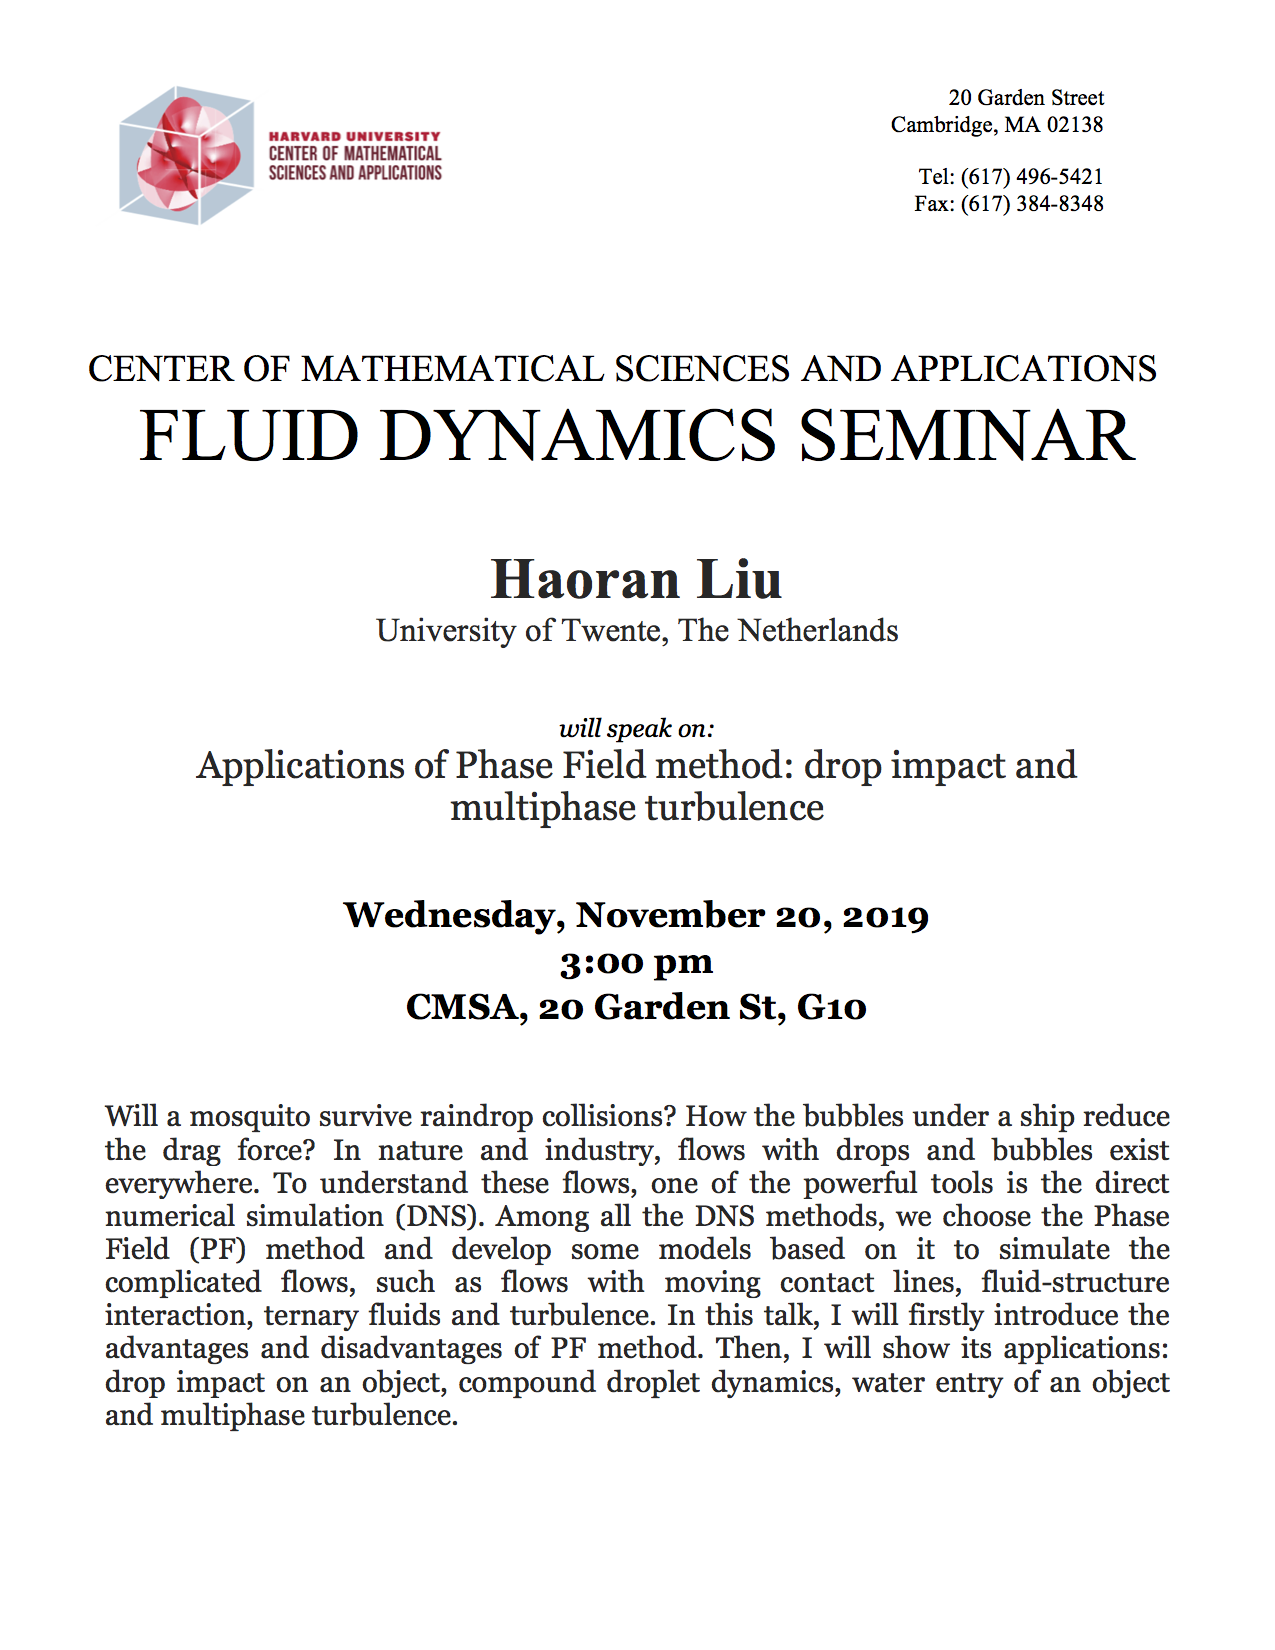 11/20/2019 Fluid Dynamics Seminar